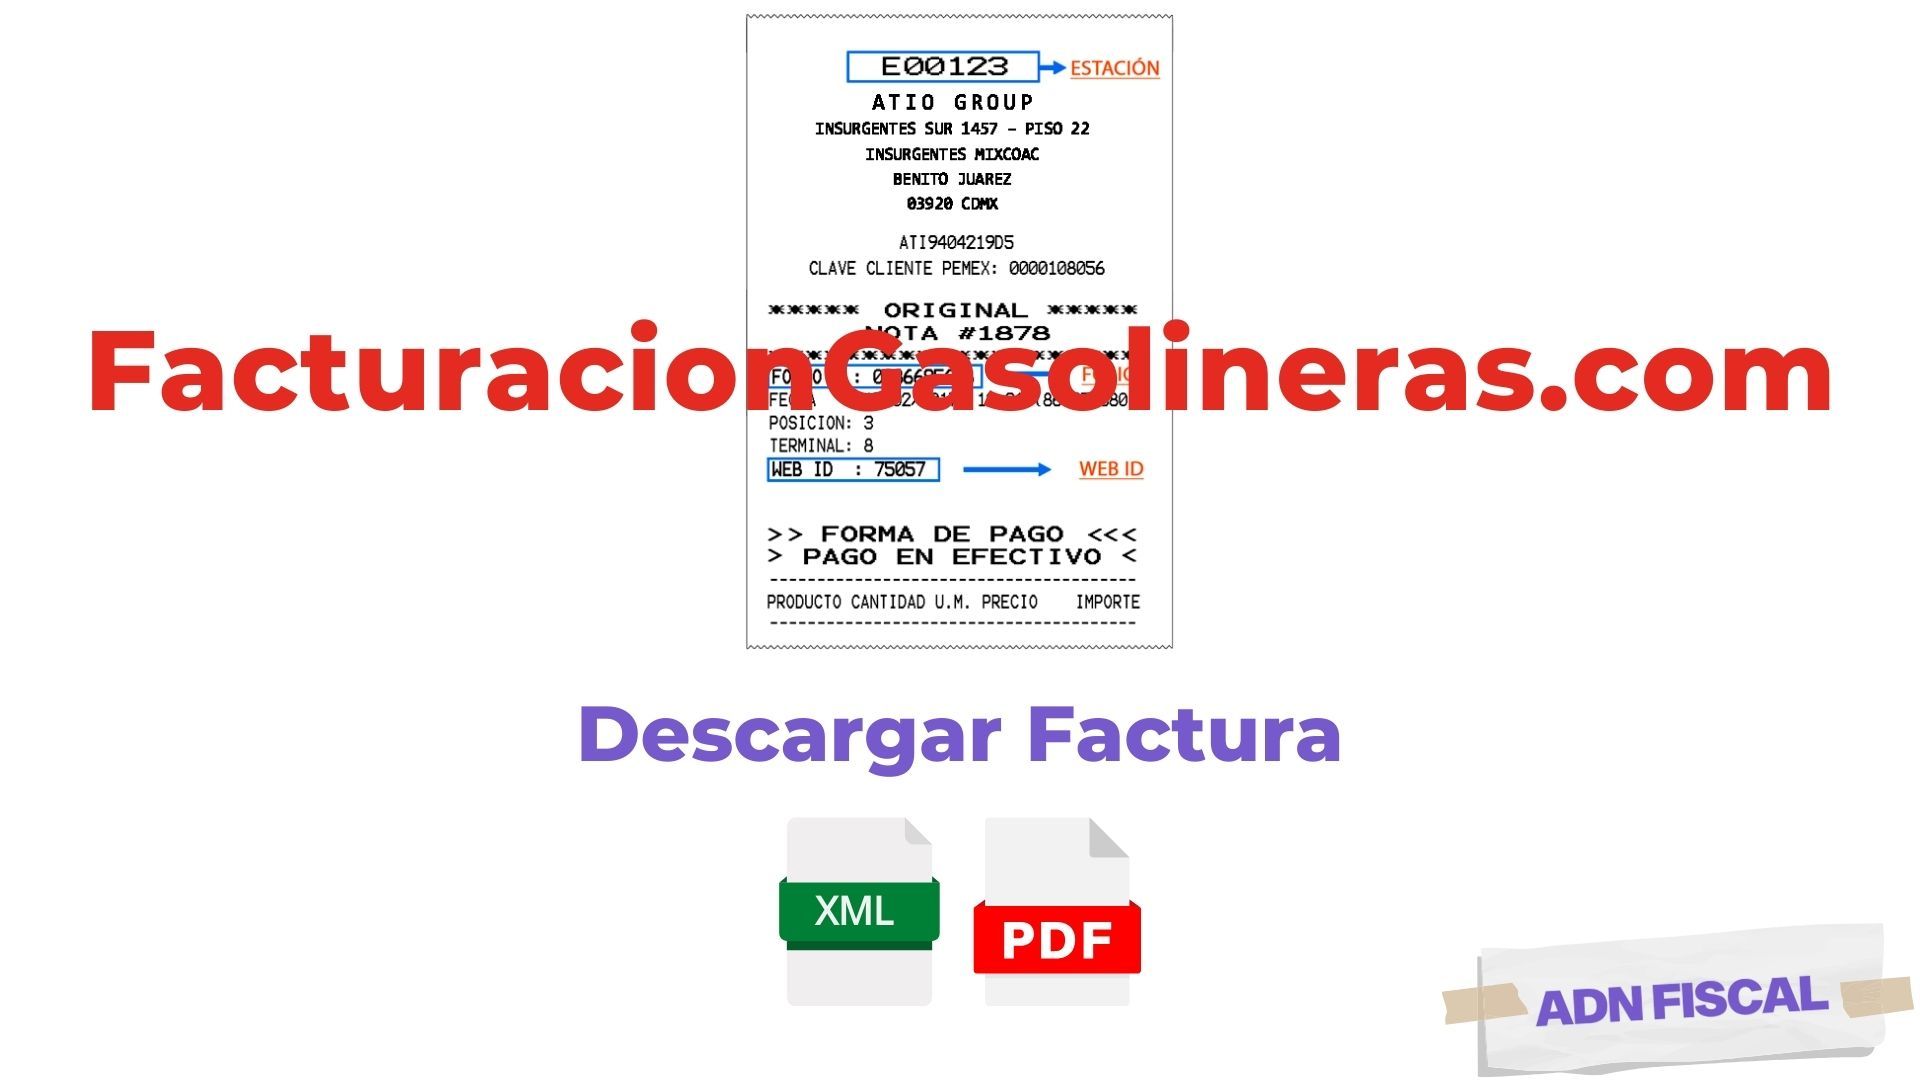 Facturacion FacturacionGasolineras com Gasolineras ⛽ ADN Fiscal